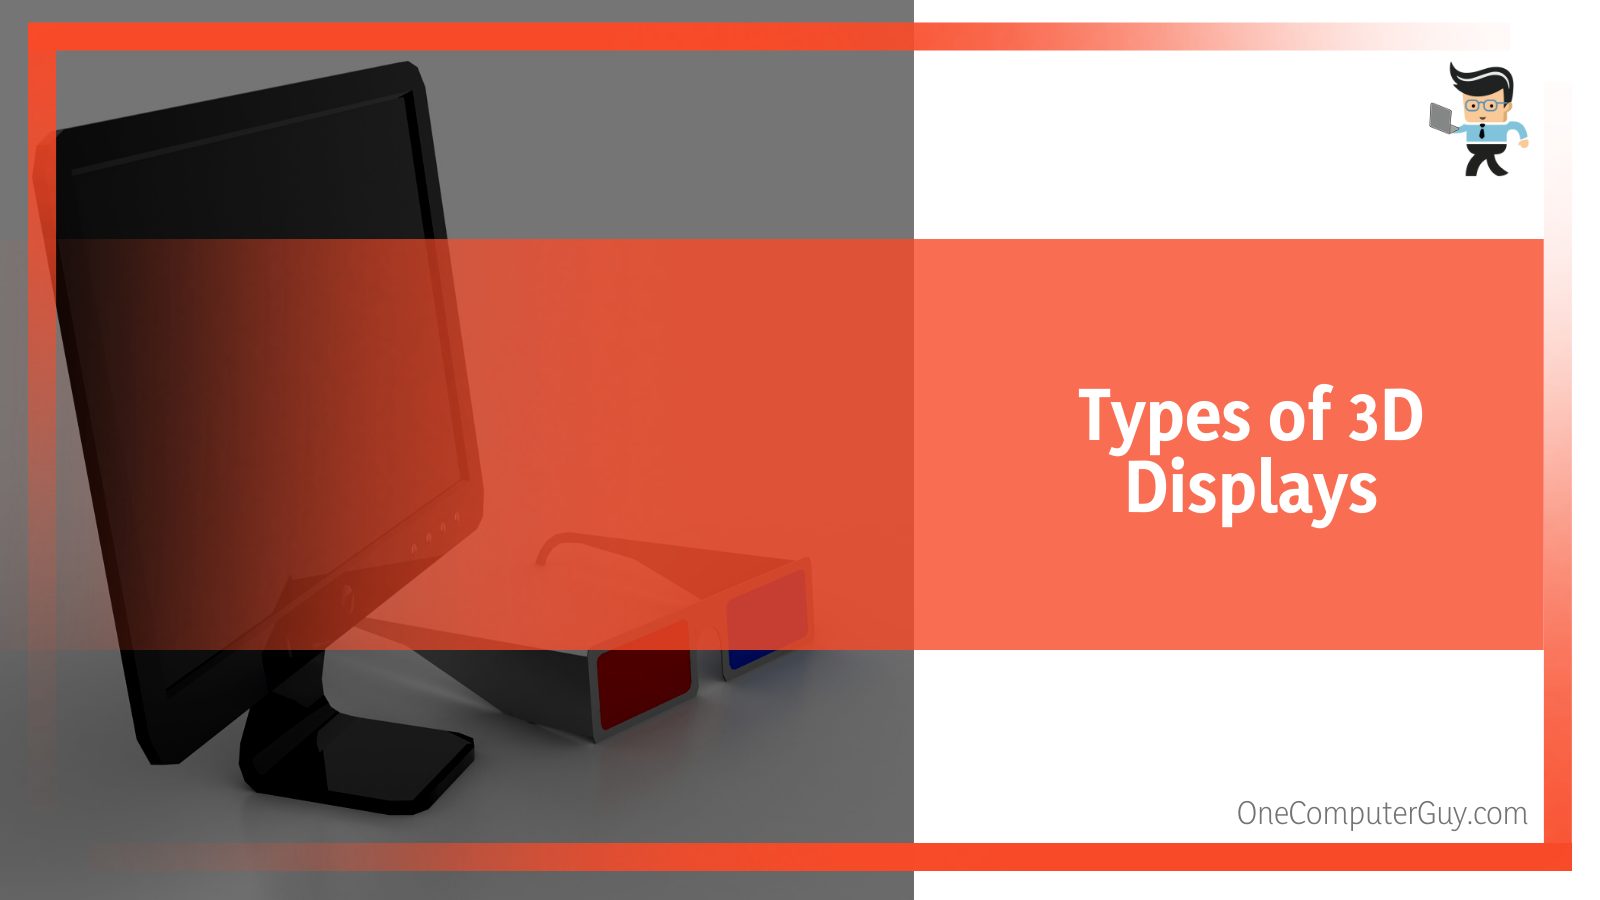 Types of 3D Displays